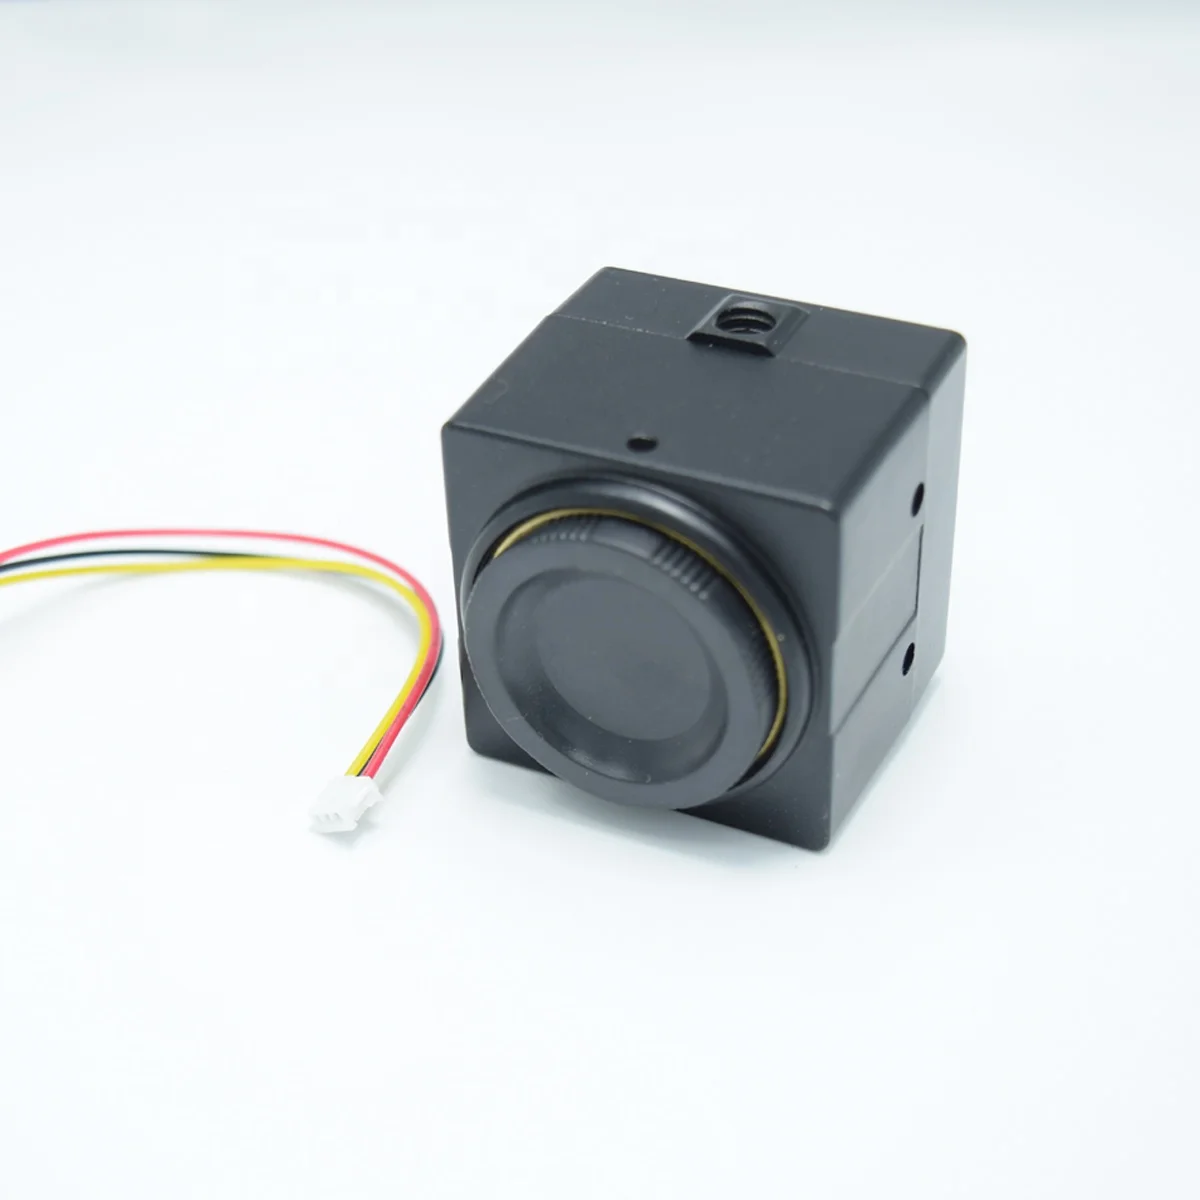 

HQCAM Mini BOX Camera black and white camera sony ccd ICX255 IXC254AL 0.00001 low illumination Industrial visual inspection